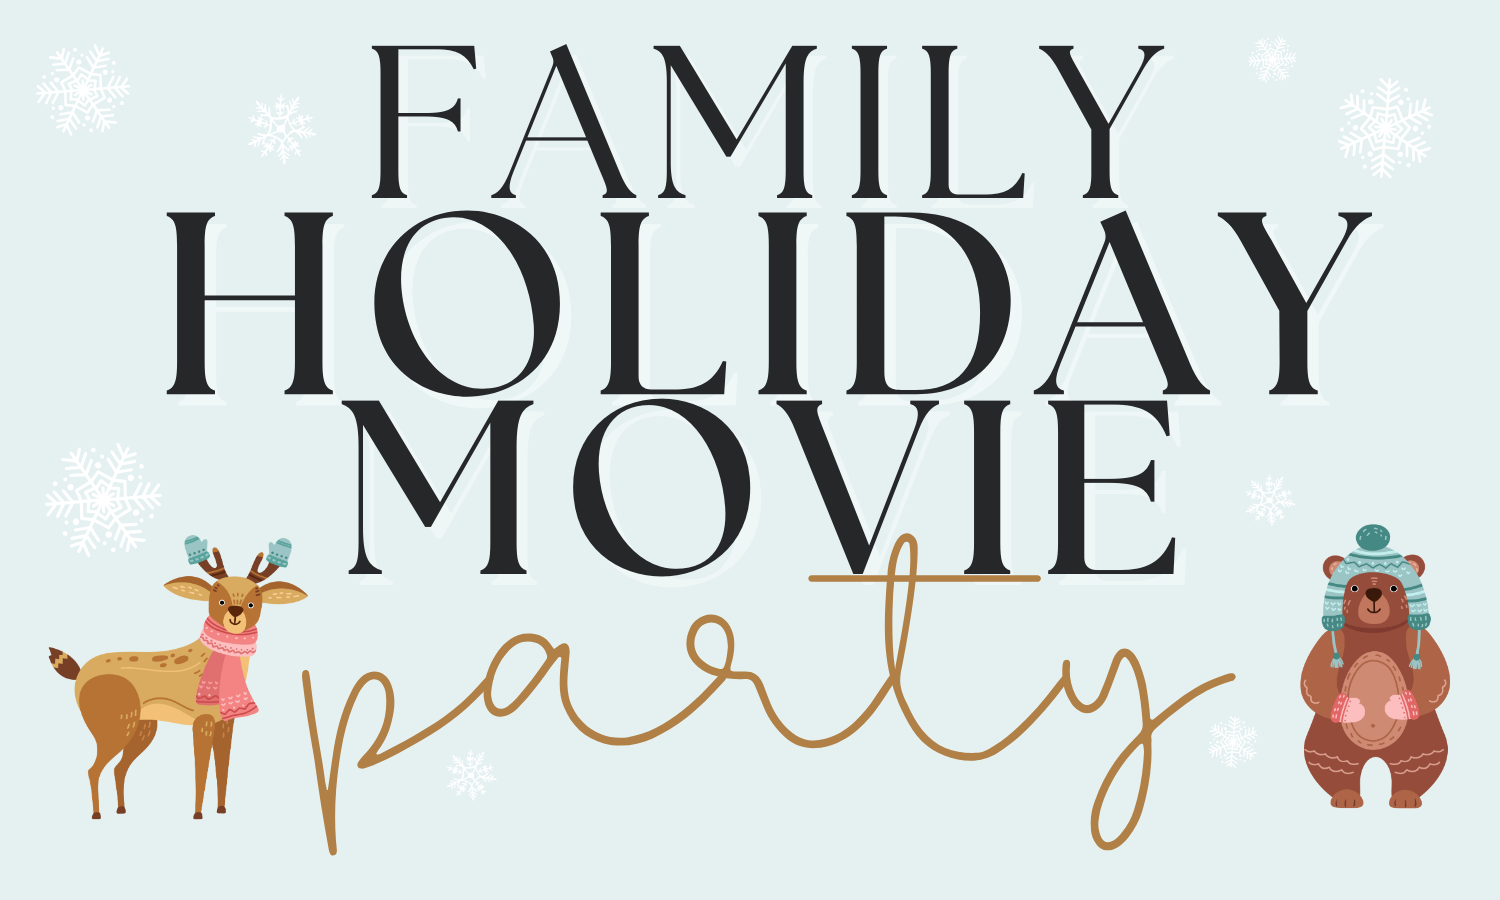 Family Holiday Movie Party!